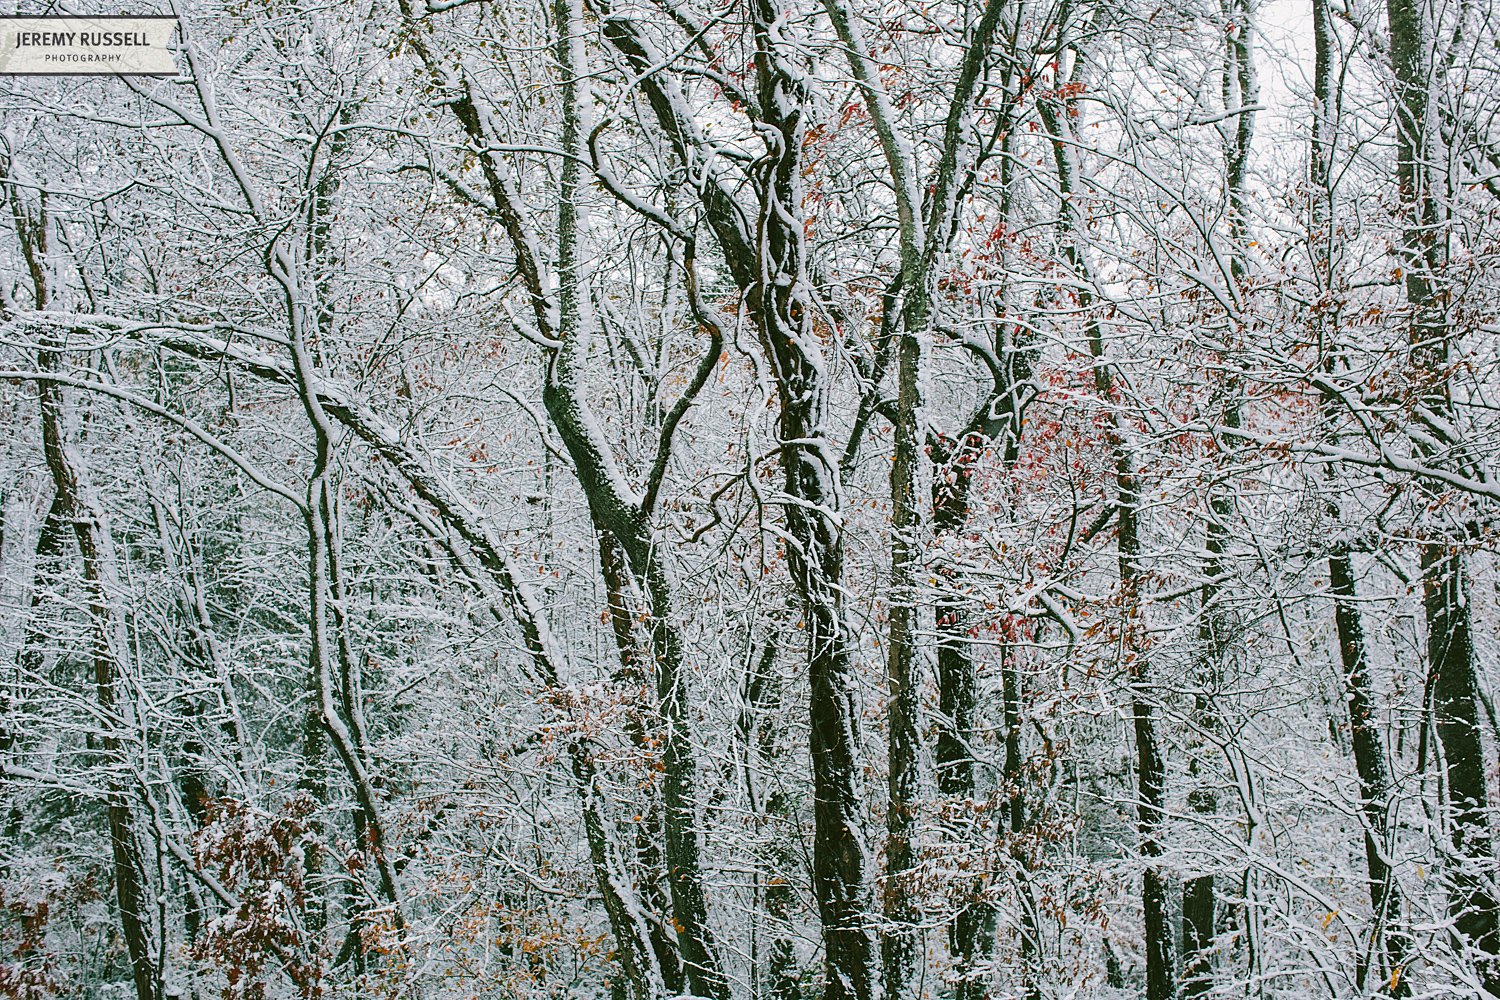 Jeremy-Russell-14-Asheville-Fall-Snow-1.jpg